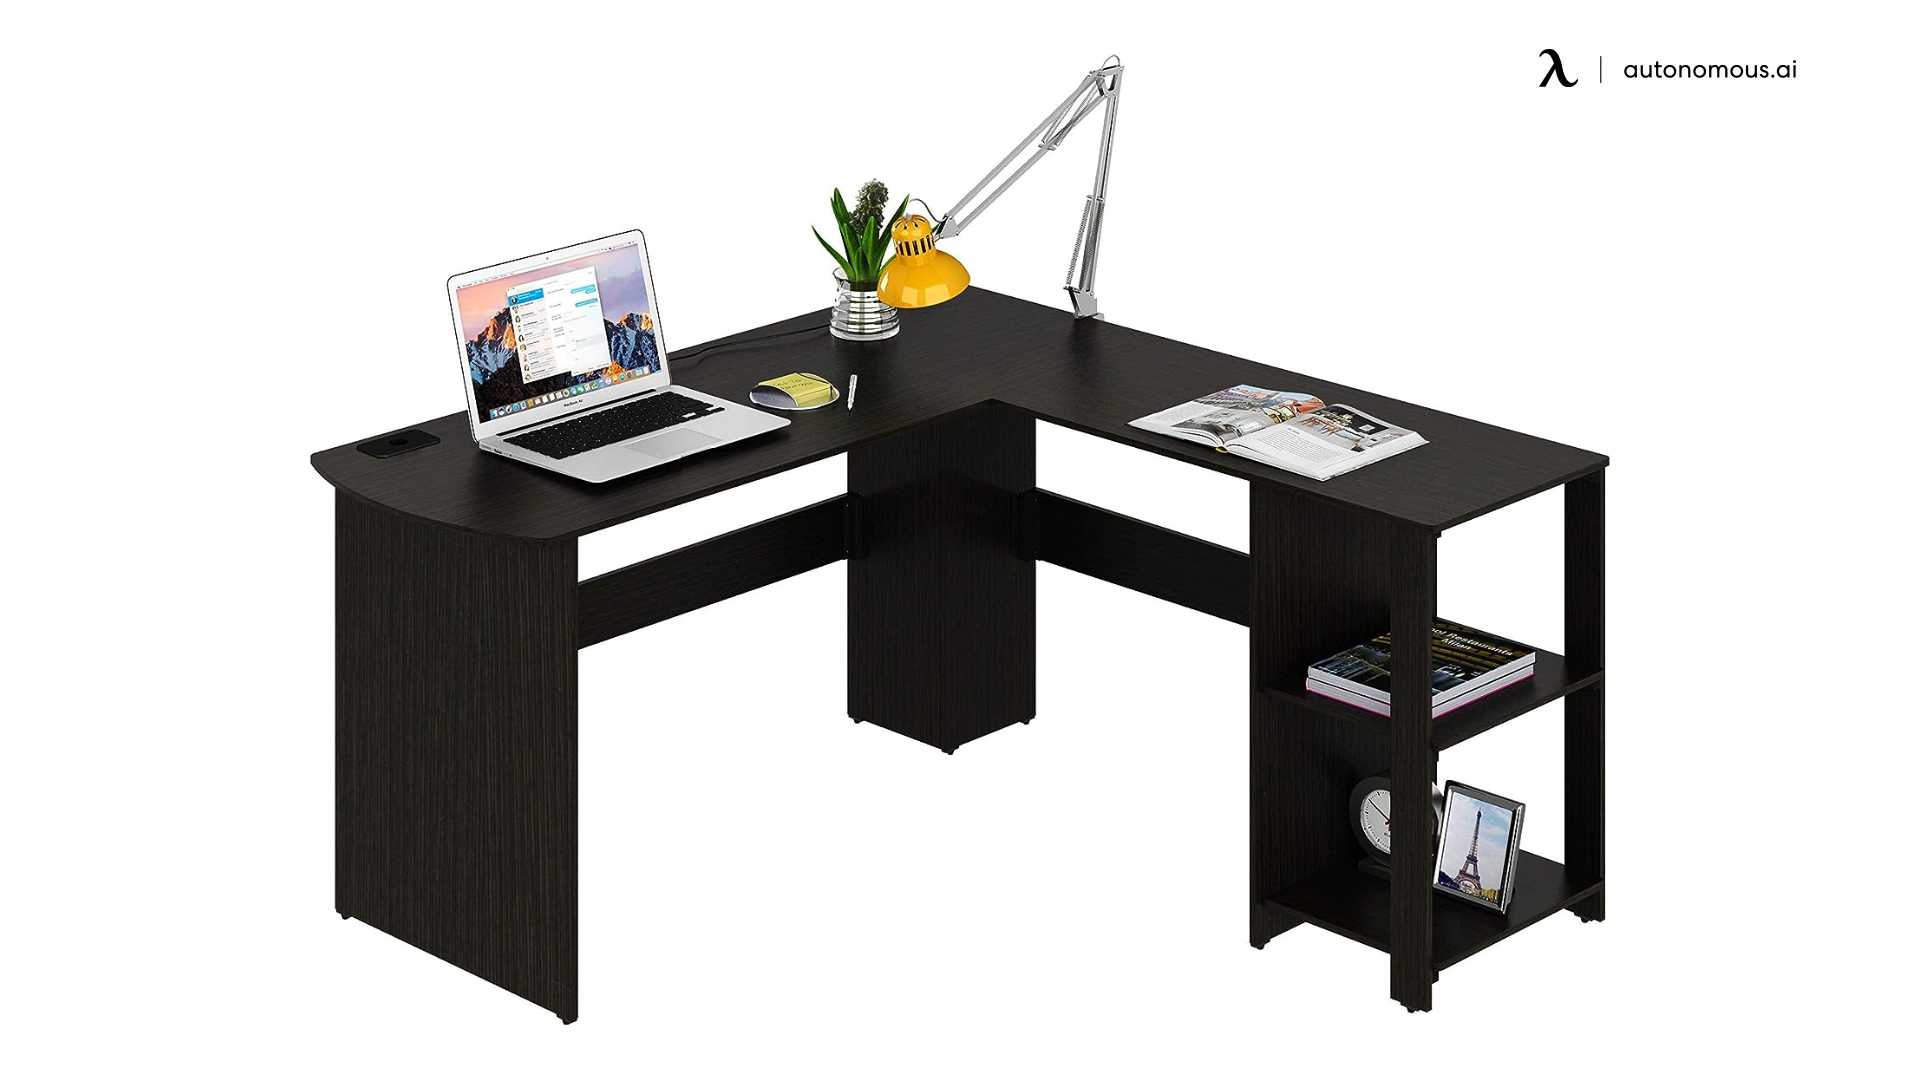 SHW L-Shaped Home Office Wood Corner Desk